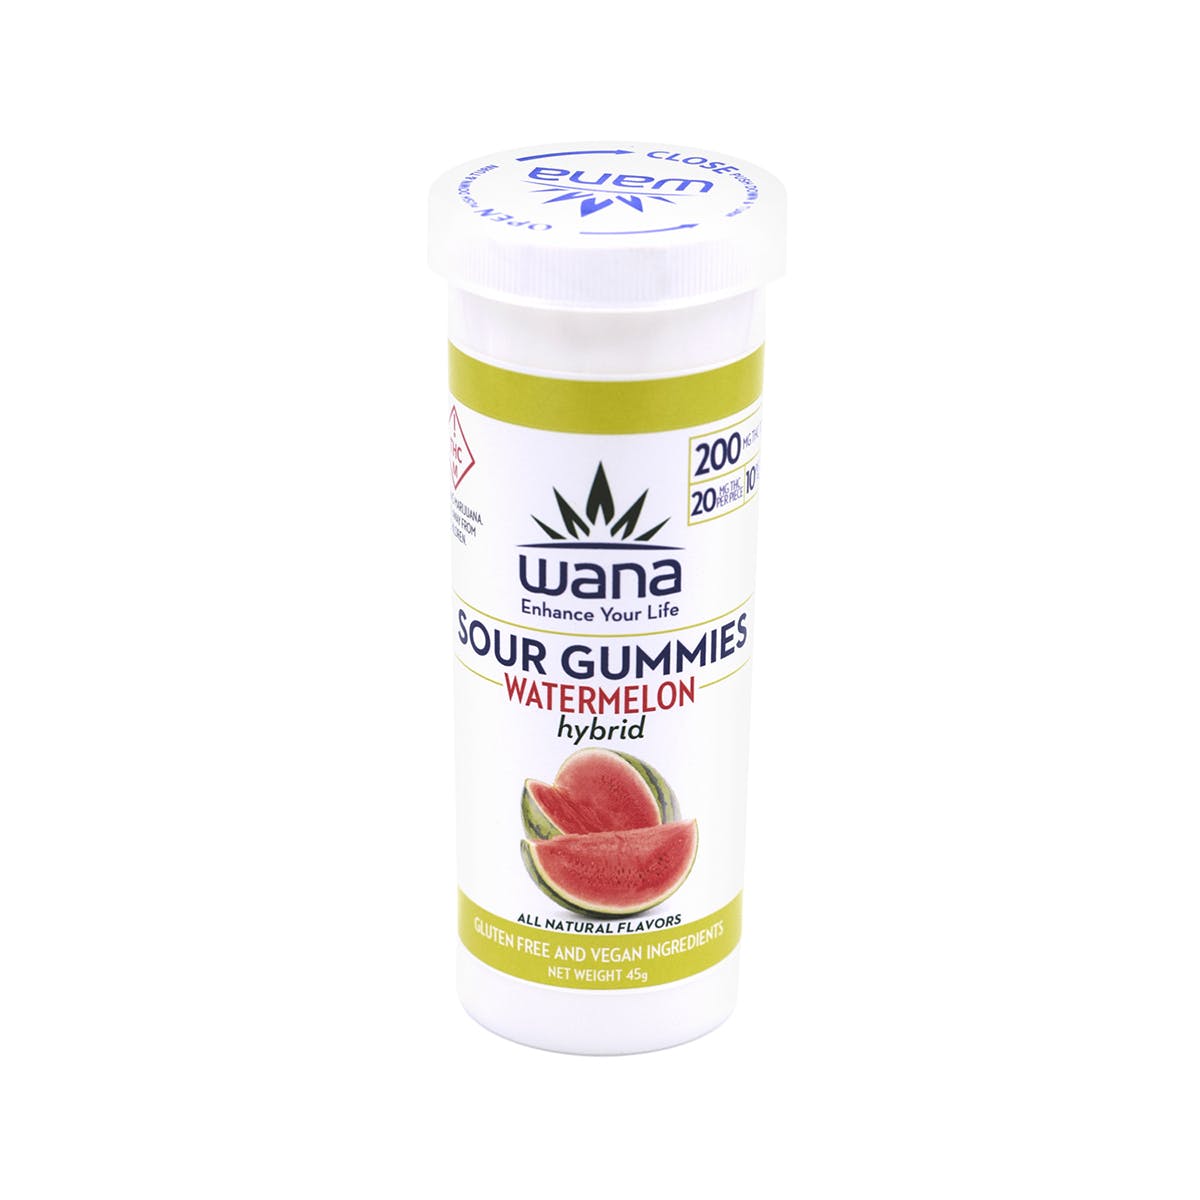 marijuana-dispensaries-green-cross-caregivers-in-denver-watermelon-sour-gummies-200mg-hybrid-med